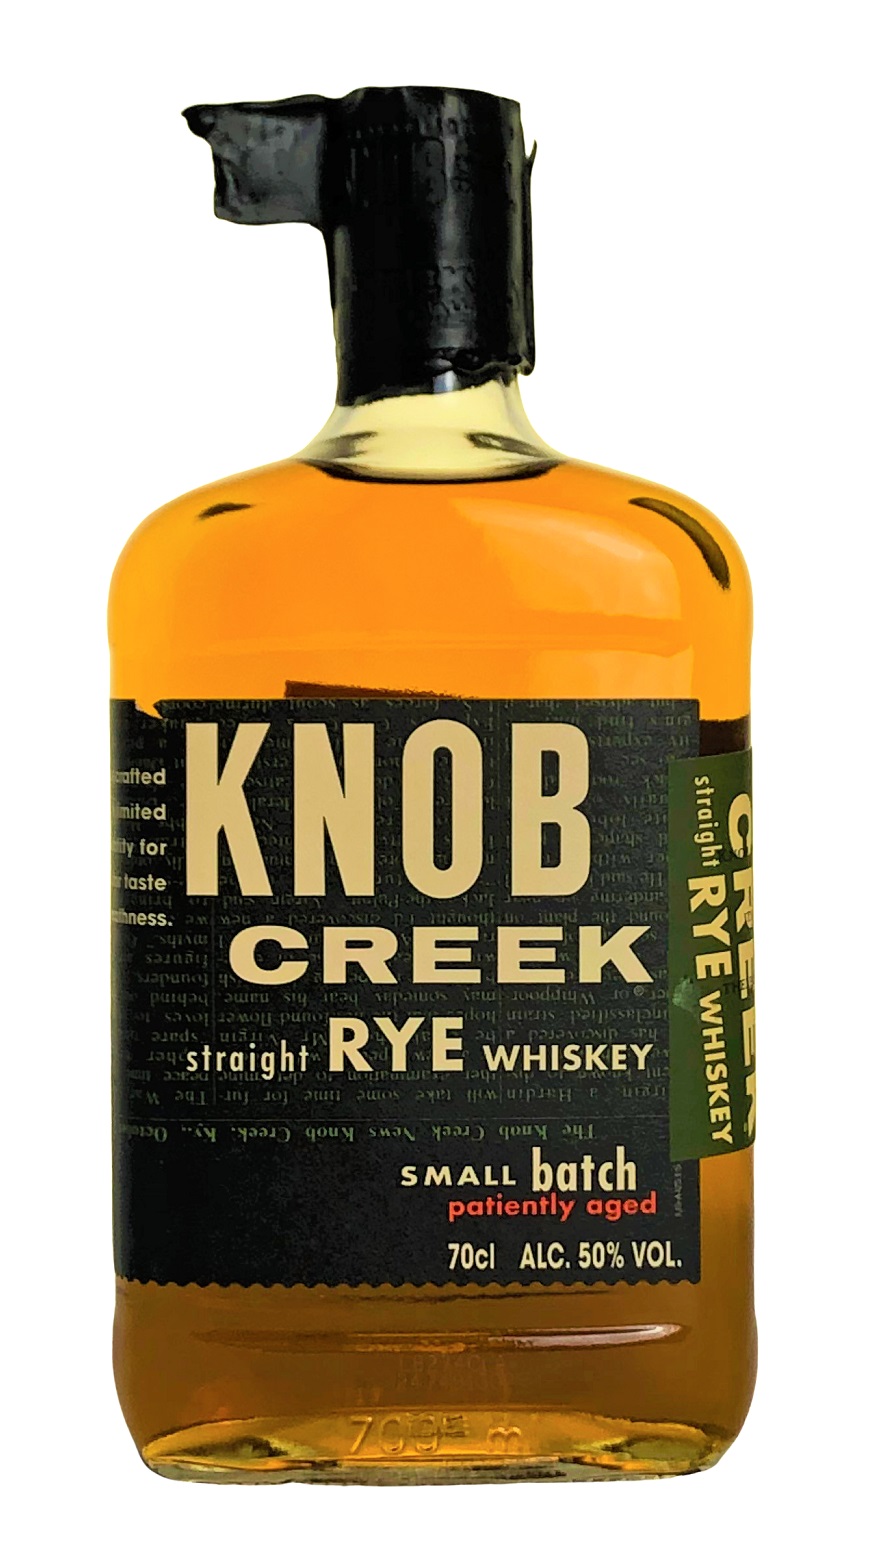 Knob Creek Kentucky Straight Rye Whisky